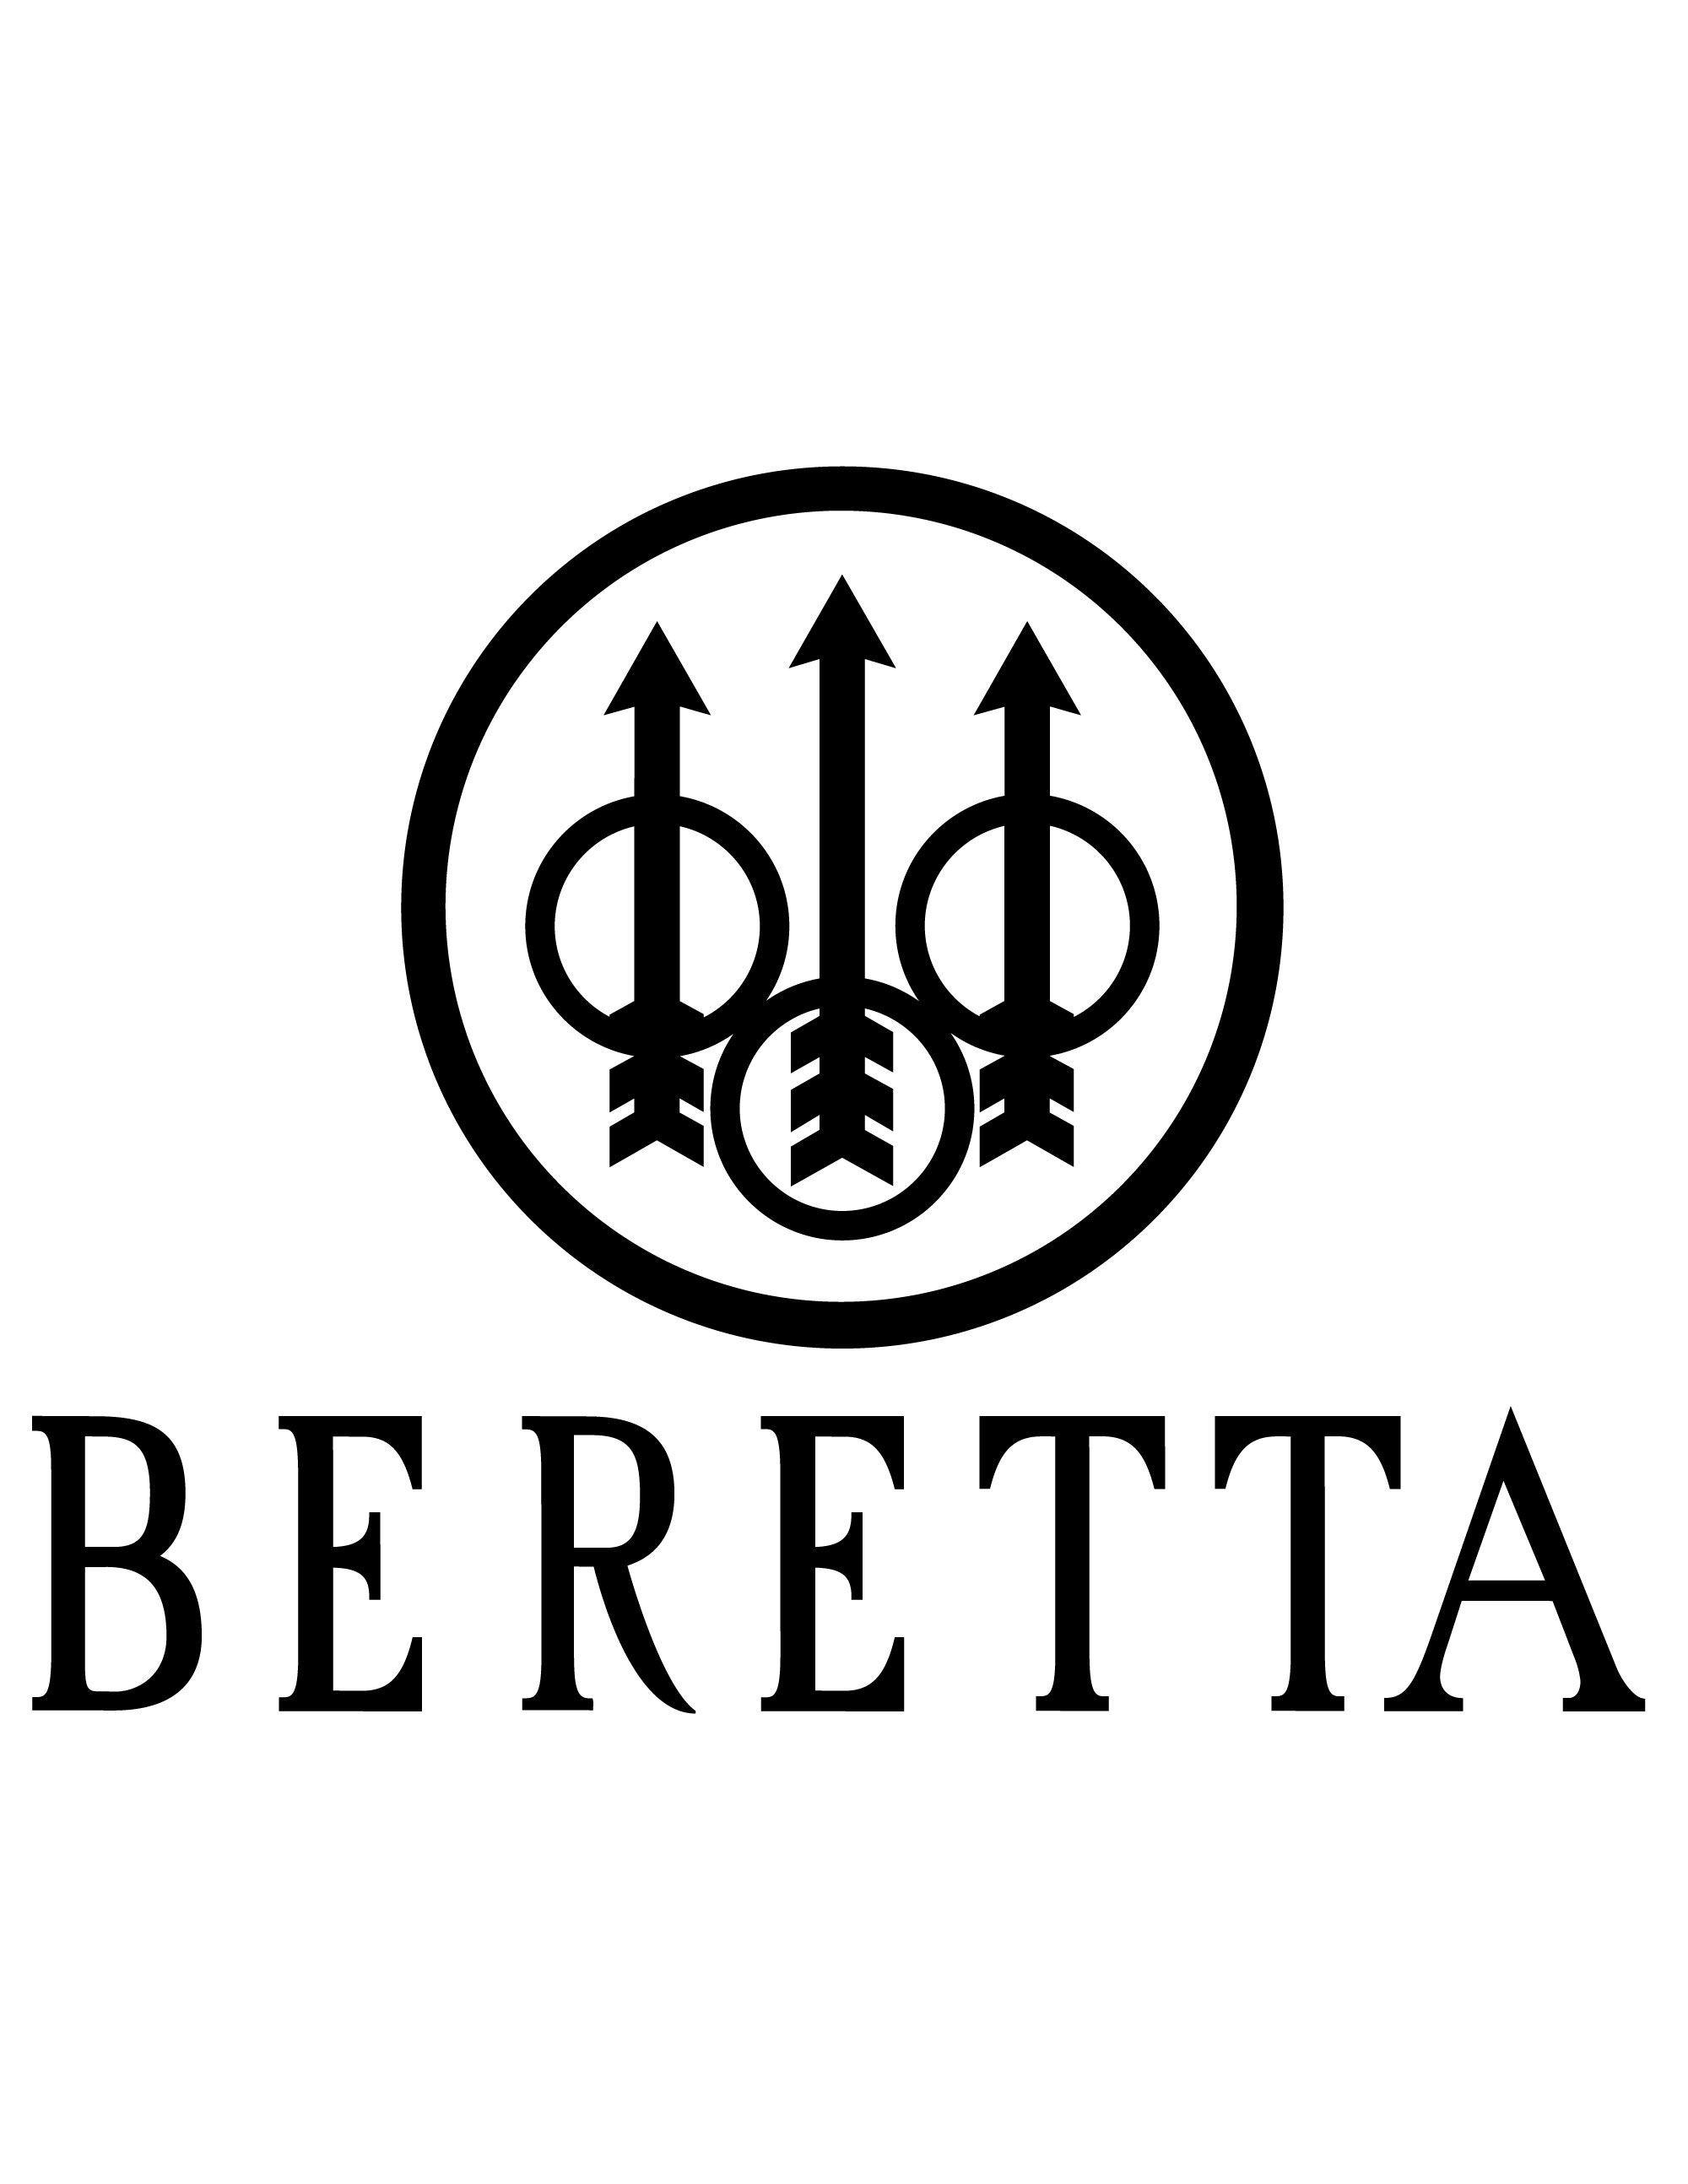 Barreta Logo - Beretta (Firearms manufacturer) | cool | Guns, Guns, ammo, Firearms